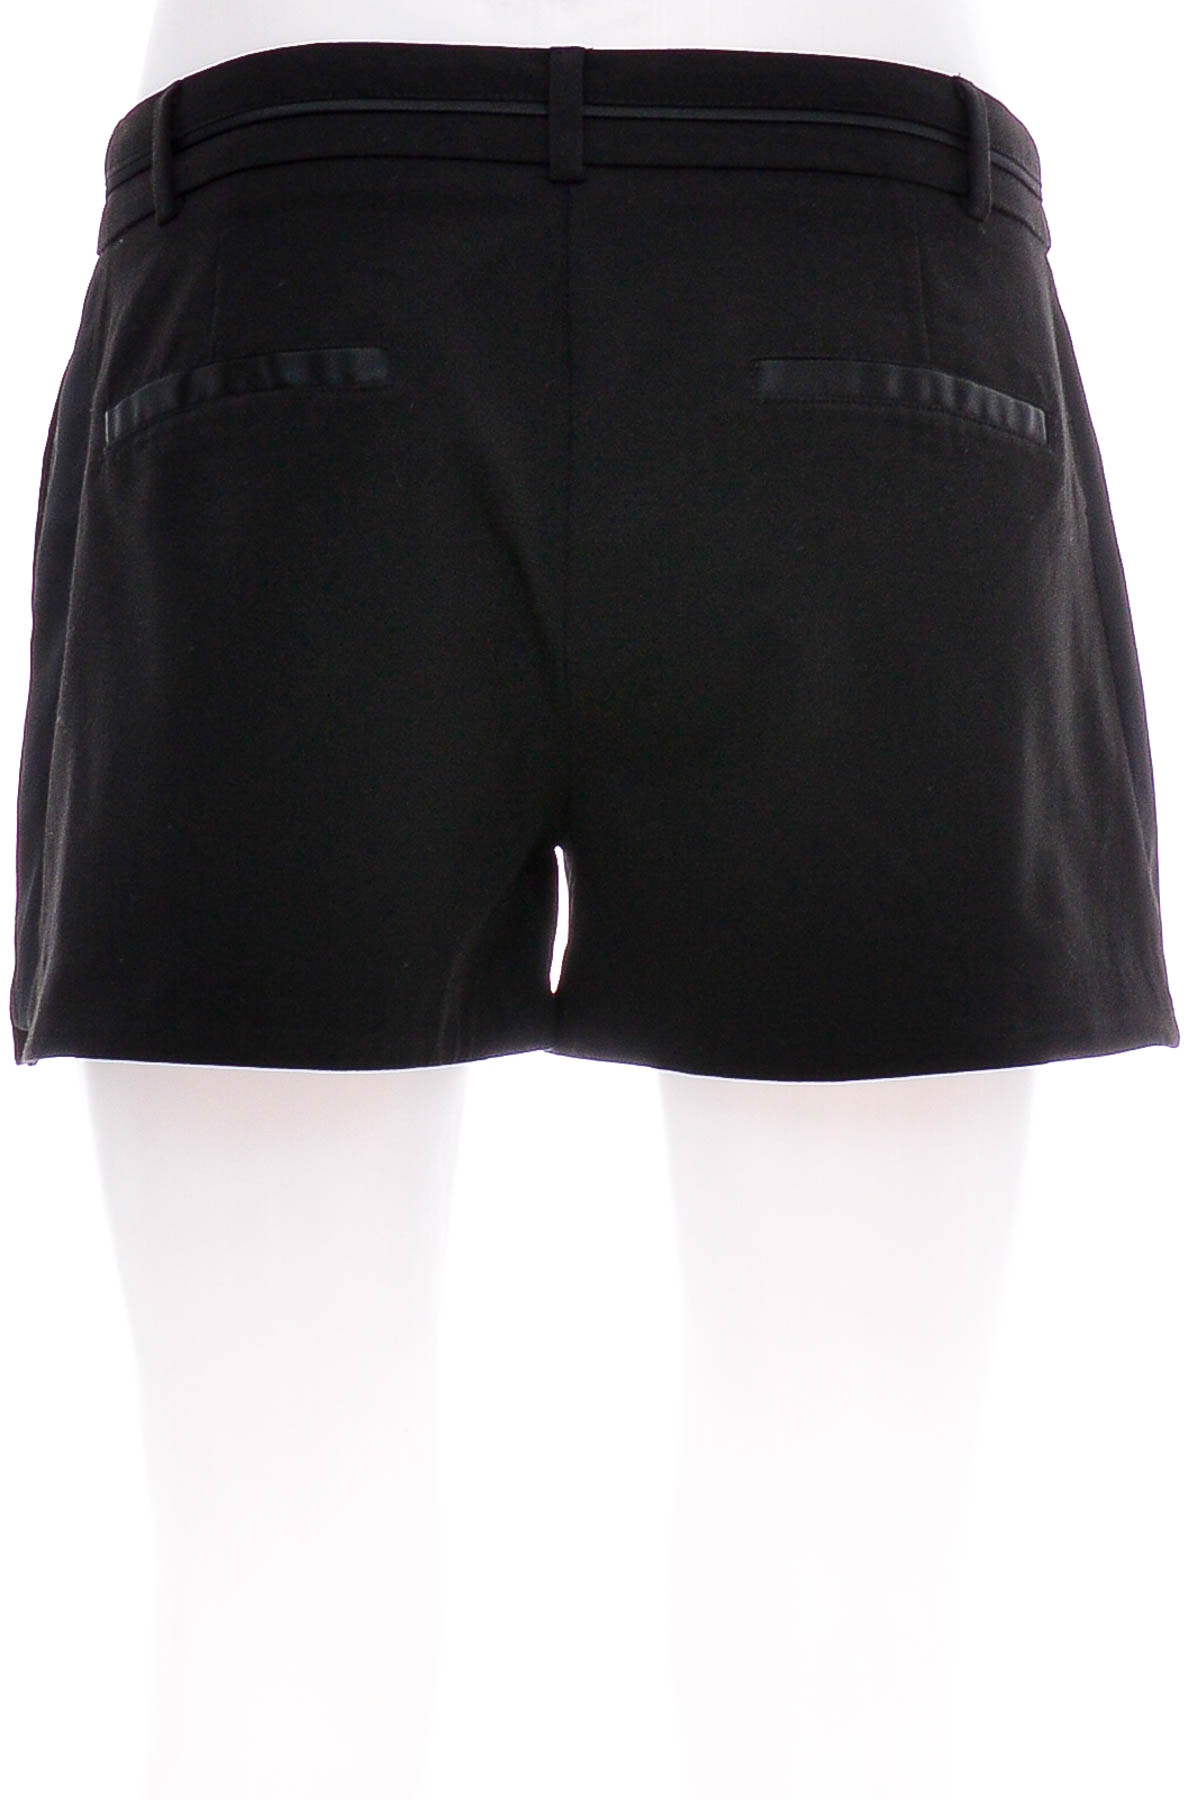 Female shorts - Camaieu - 1